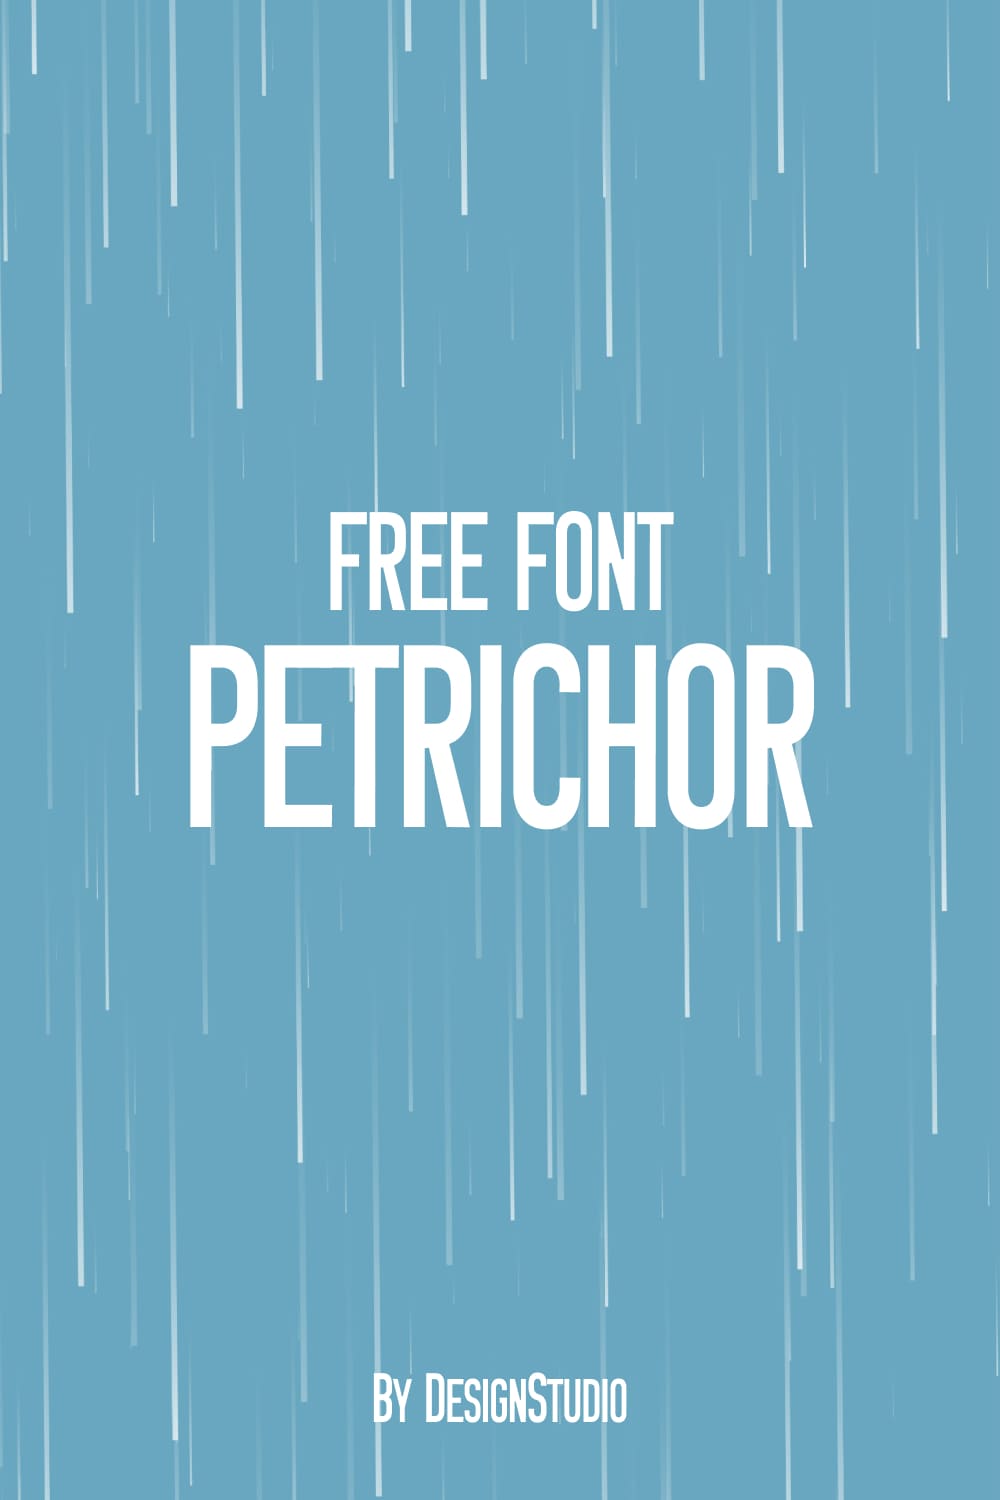 Petrichor Monospaced Sans Serif Font Pinterest.